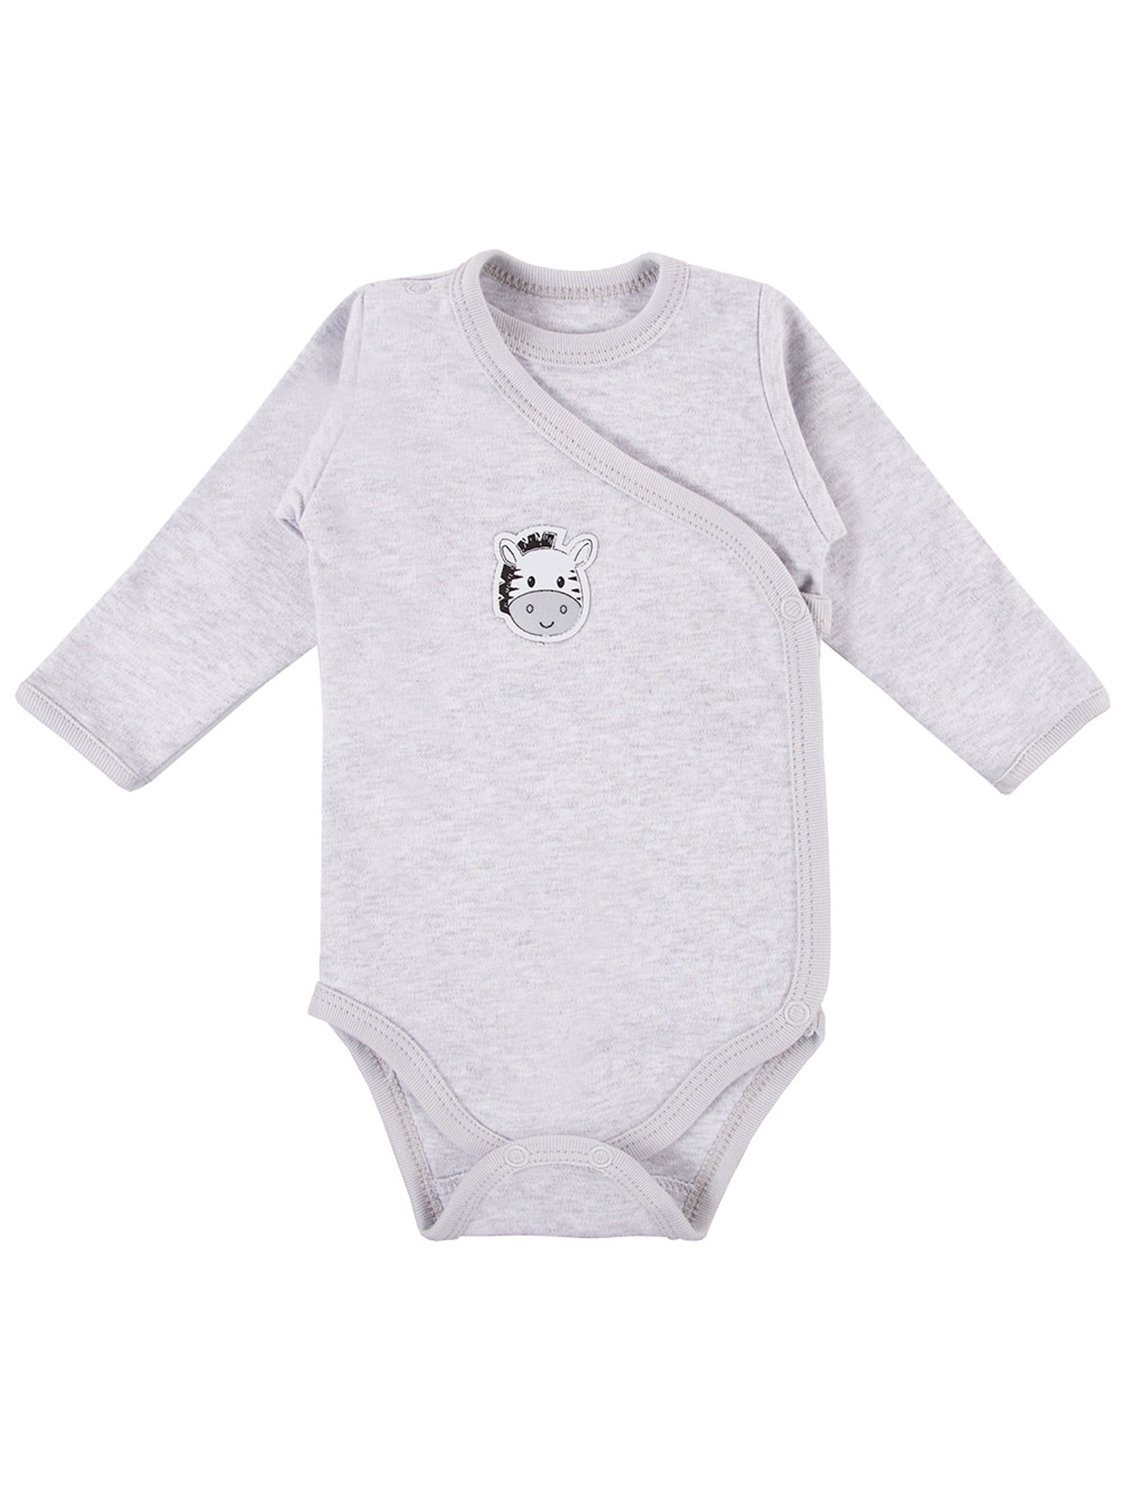 Early Baby Long Sleeved Bodysuit, Cute Zebra Design - Grey - Bodysuit / Vest - EEVI